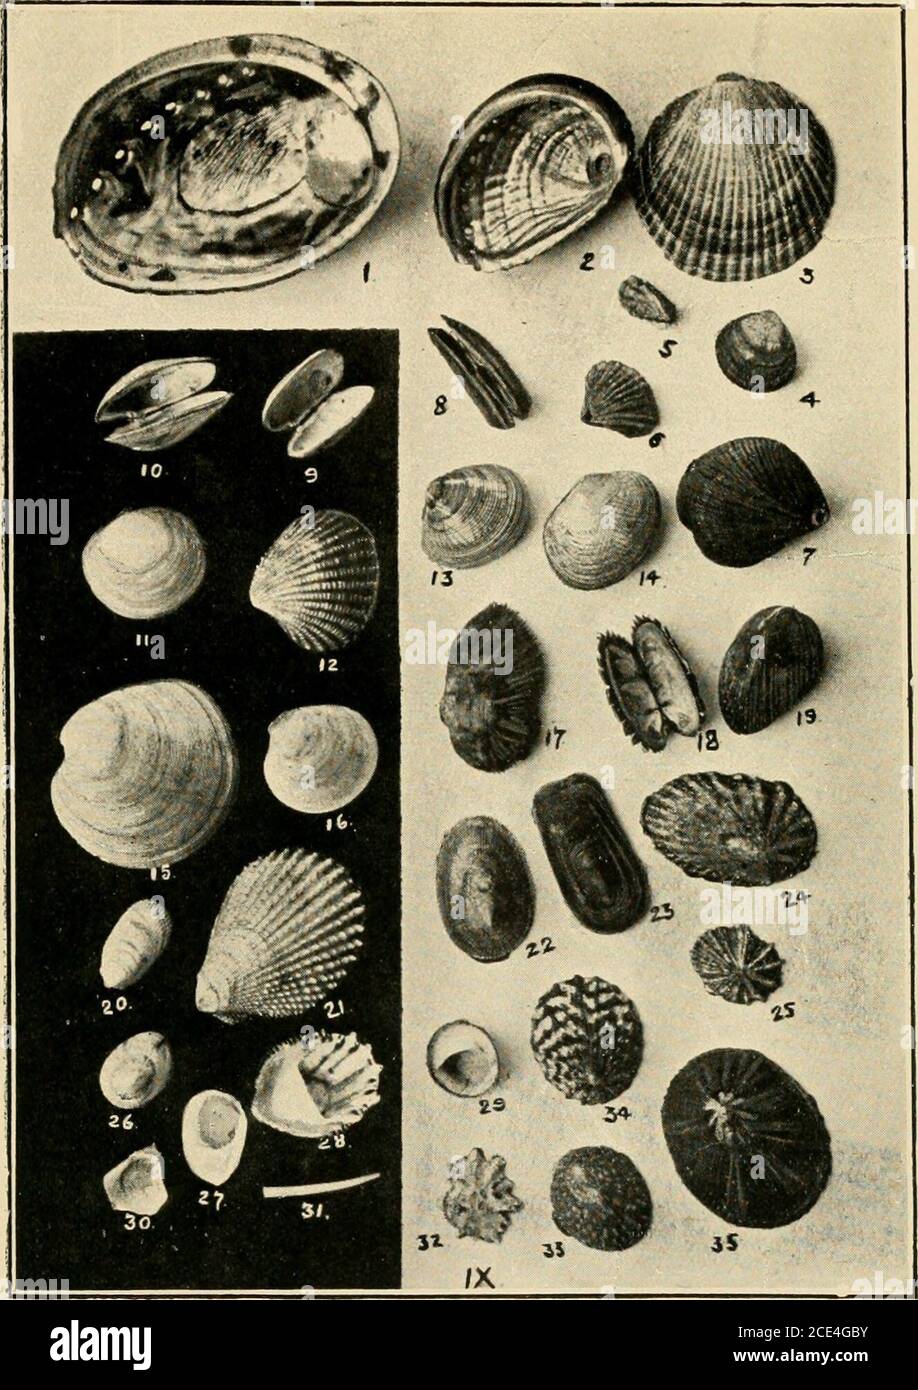 . Beautiful shells of New Zealand : an illustrated work for amateur collectors of New Zealand marine shells, with directions for collecting and cleaning them . Lifca&lt; VIII. Page 1âBarnea similis .. 32 2âPholadidea tridens .. 32 3âPanopea zelandica .. 32 4âCoclilodesma angasi ... .. 32 5âCorbula zelandica .. 33 6âSaxicava arctica .. 33 7âMyodora striata .. 33 8âMyodora boltoni .. 33 9âMactra discors .. 33 10âMactra aeqnilatera .. 33 11âStandella ovata .. 33 12âStandella elongata .. 34 13âResania lanceolata .. 34 14âZenatia acinaces . 34 15âPsammobia stangeri ... .. 34 16âSolenotellina nitida Stock Photo